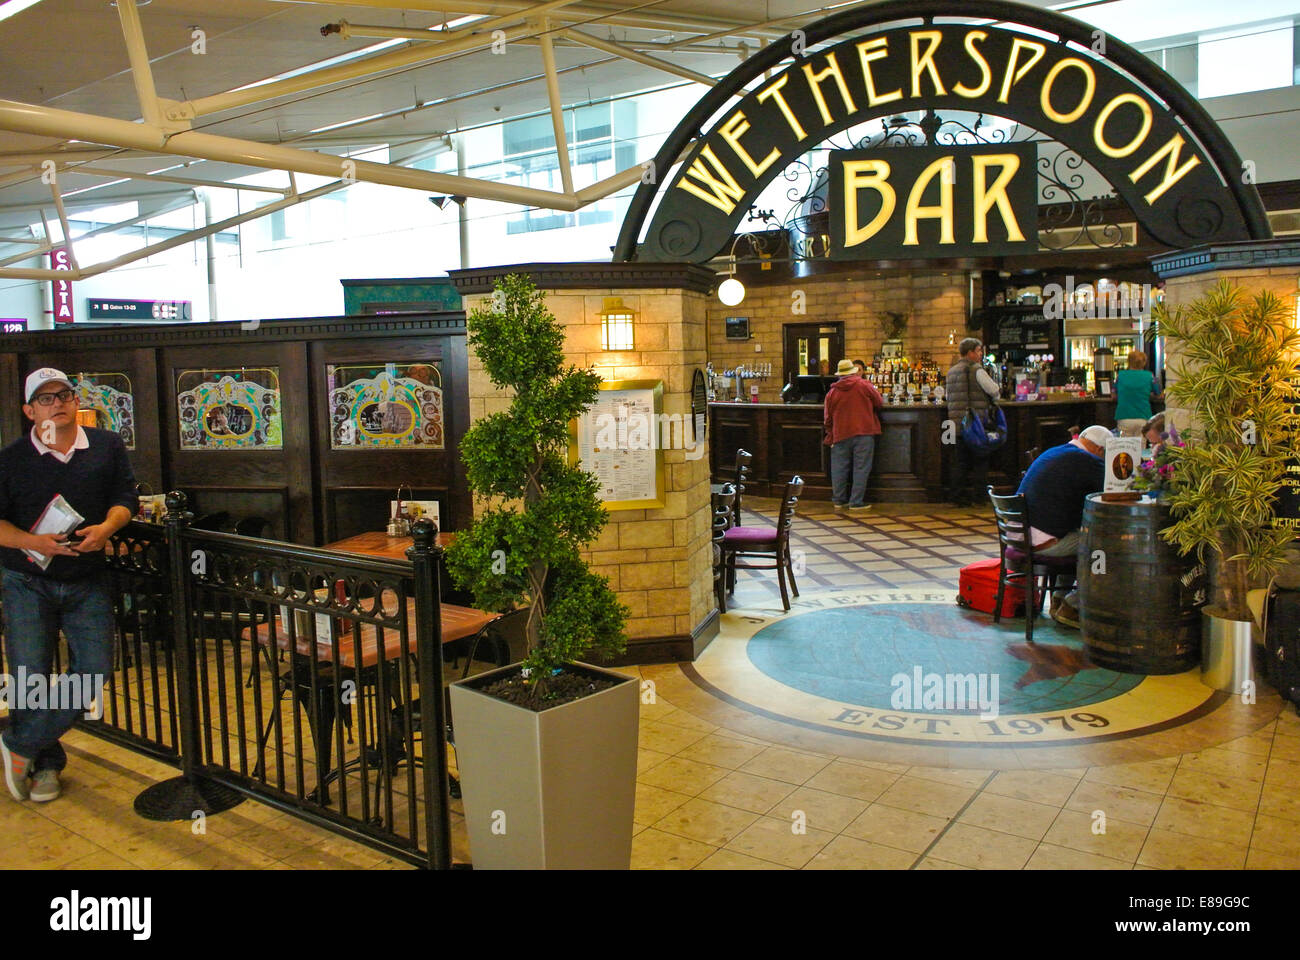 Wetherspoon bar at Edinburgh airport Stock Photo